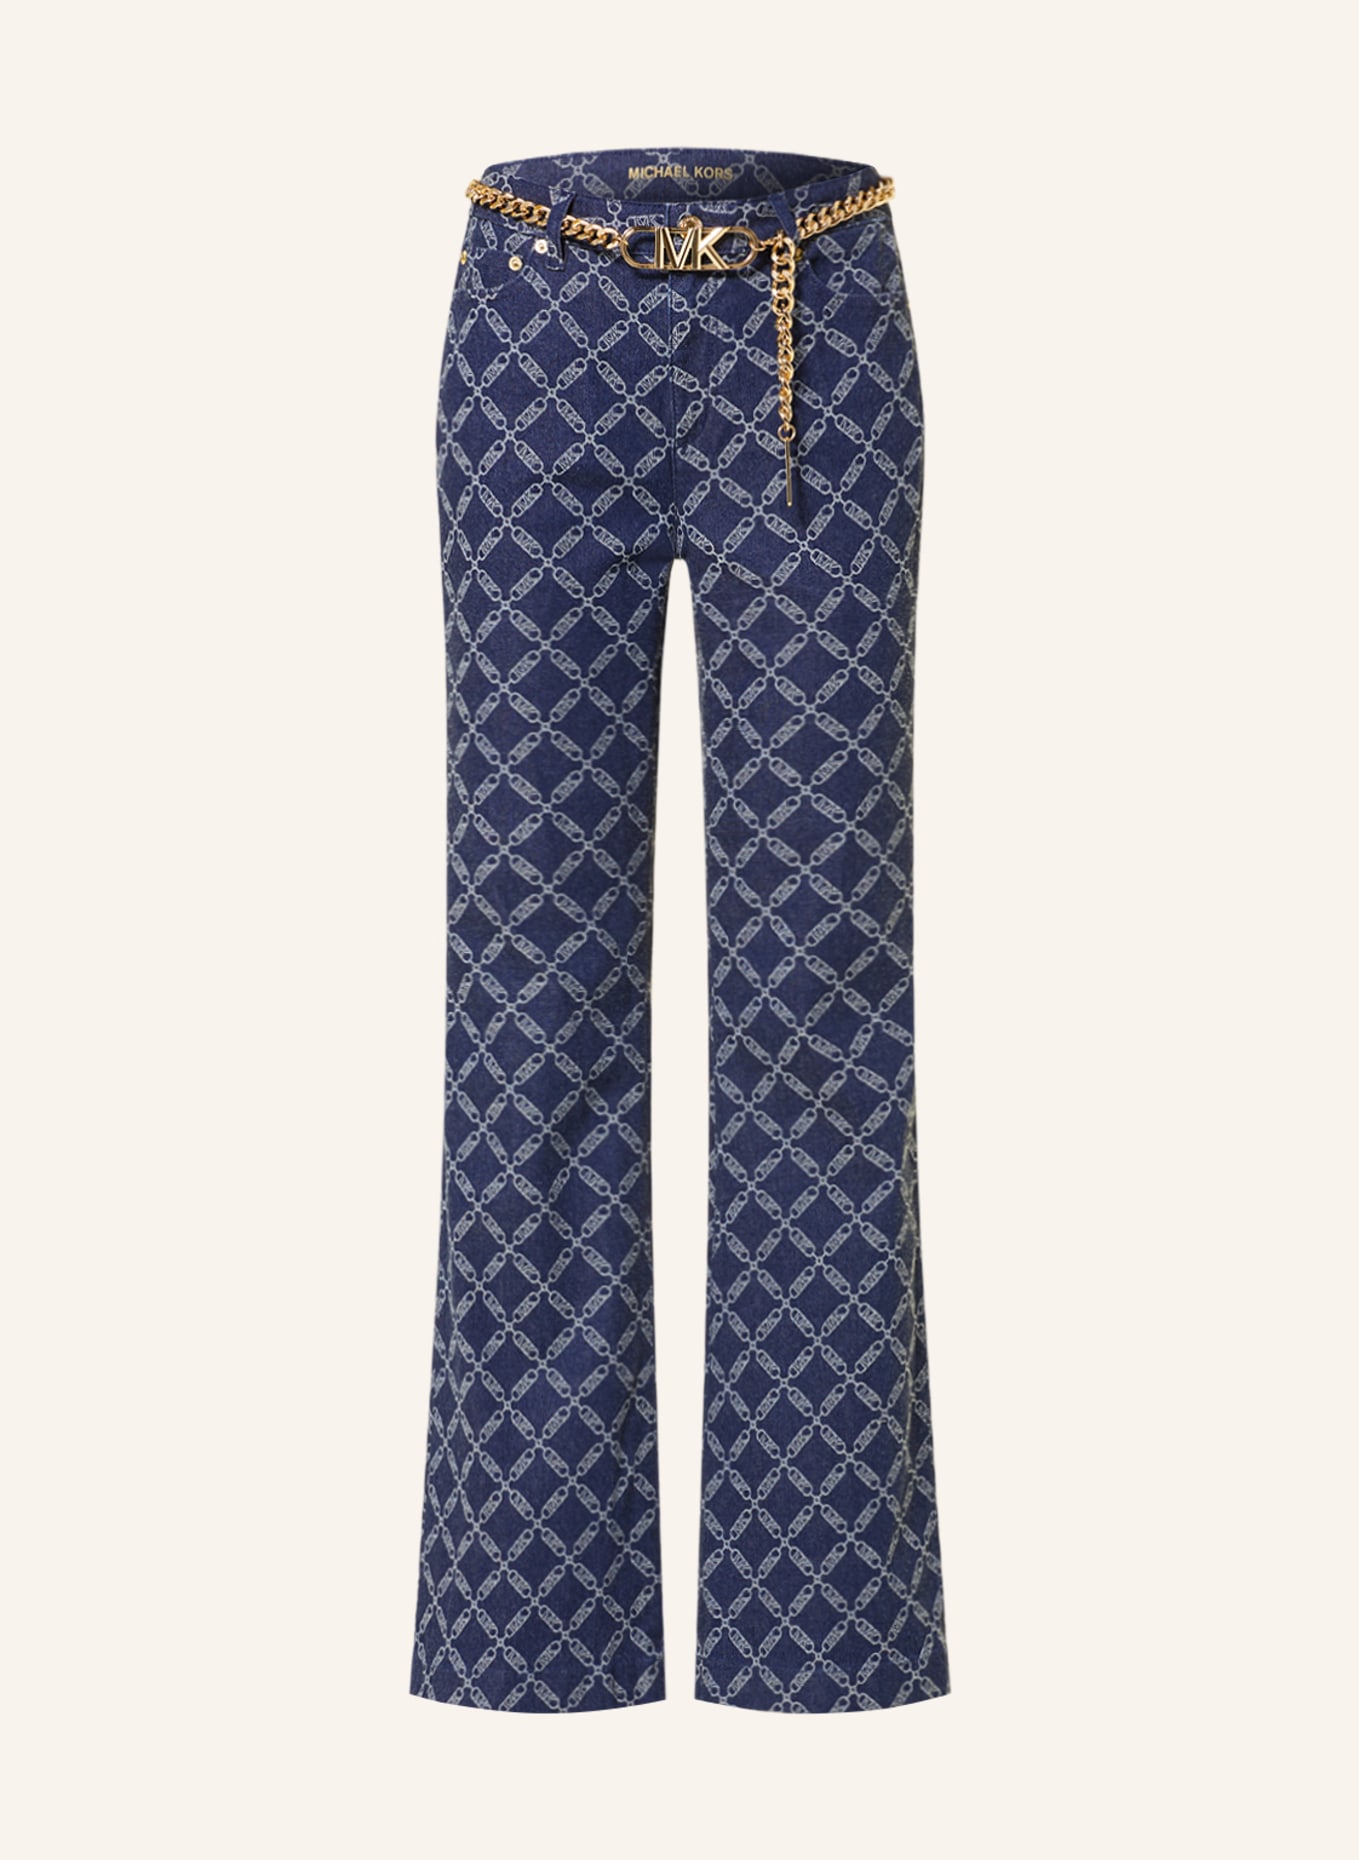 MICHAEL KORS Flared Jeans, Farbe: 976 INDIGO RINSE (Bild 1)